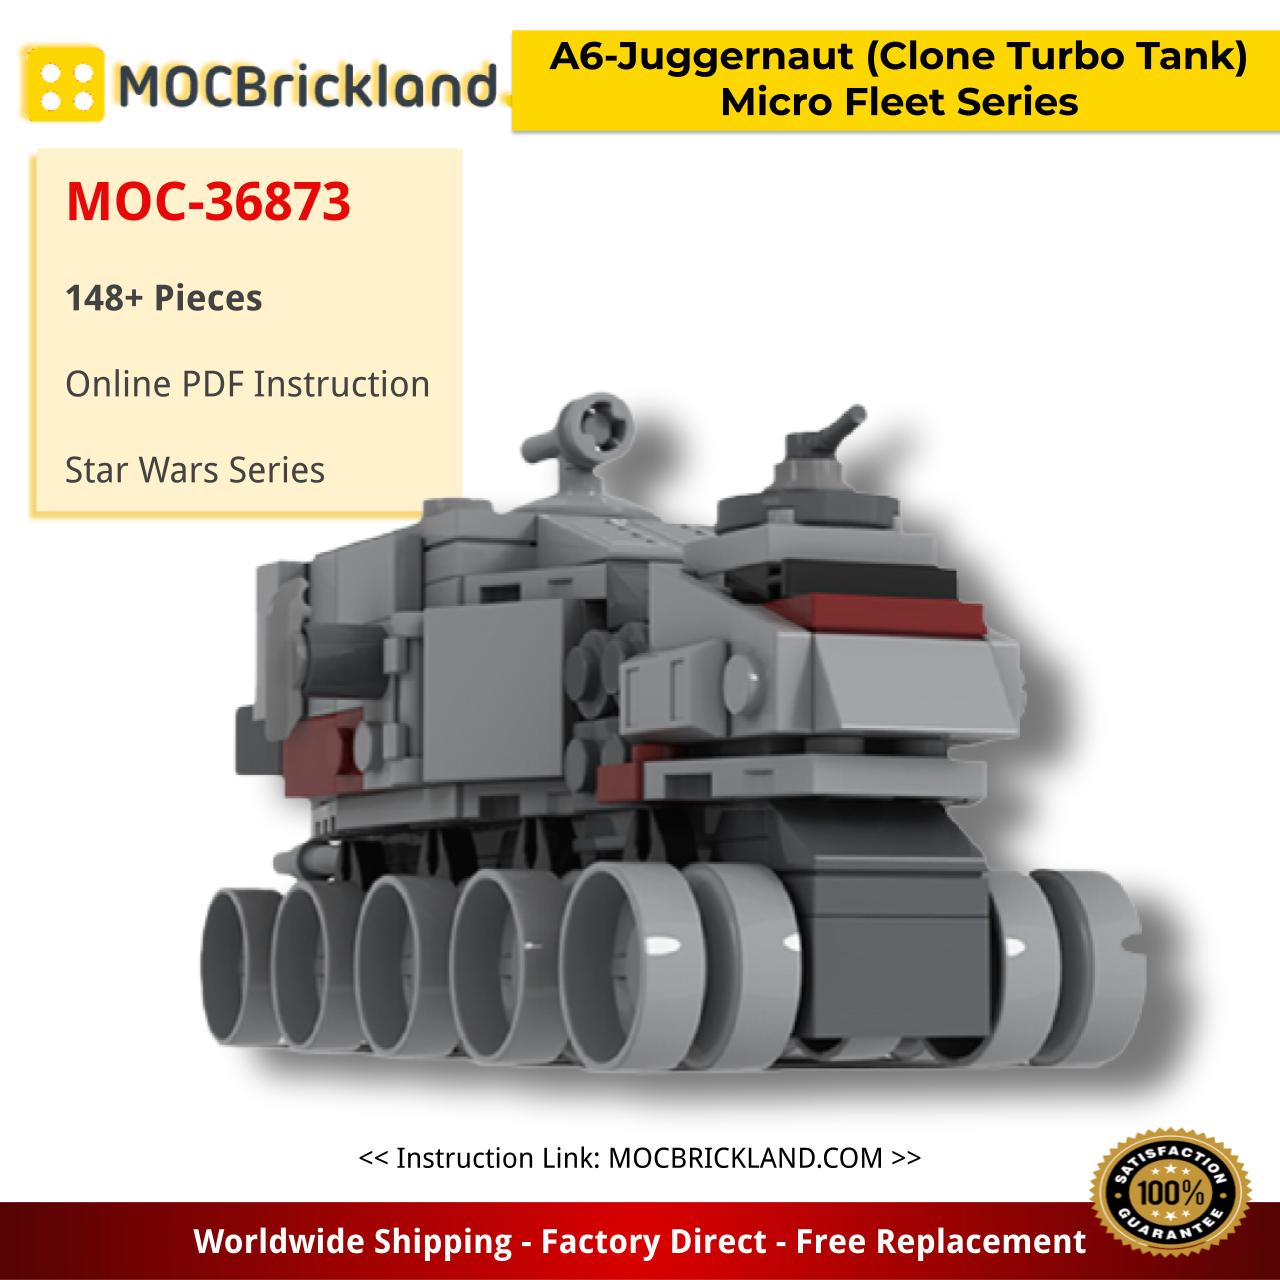 star wars moc 36873 a6 juggernaut clone turbo tank micro fleet series by 2bricksofficial mocbrickland 1869